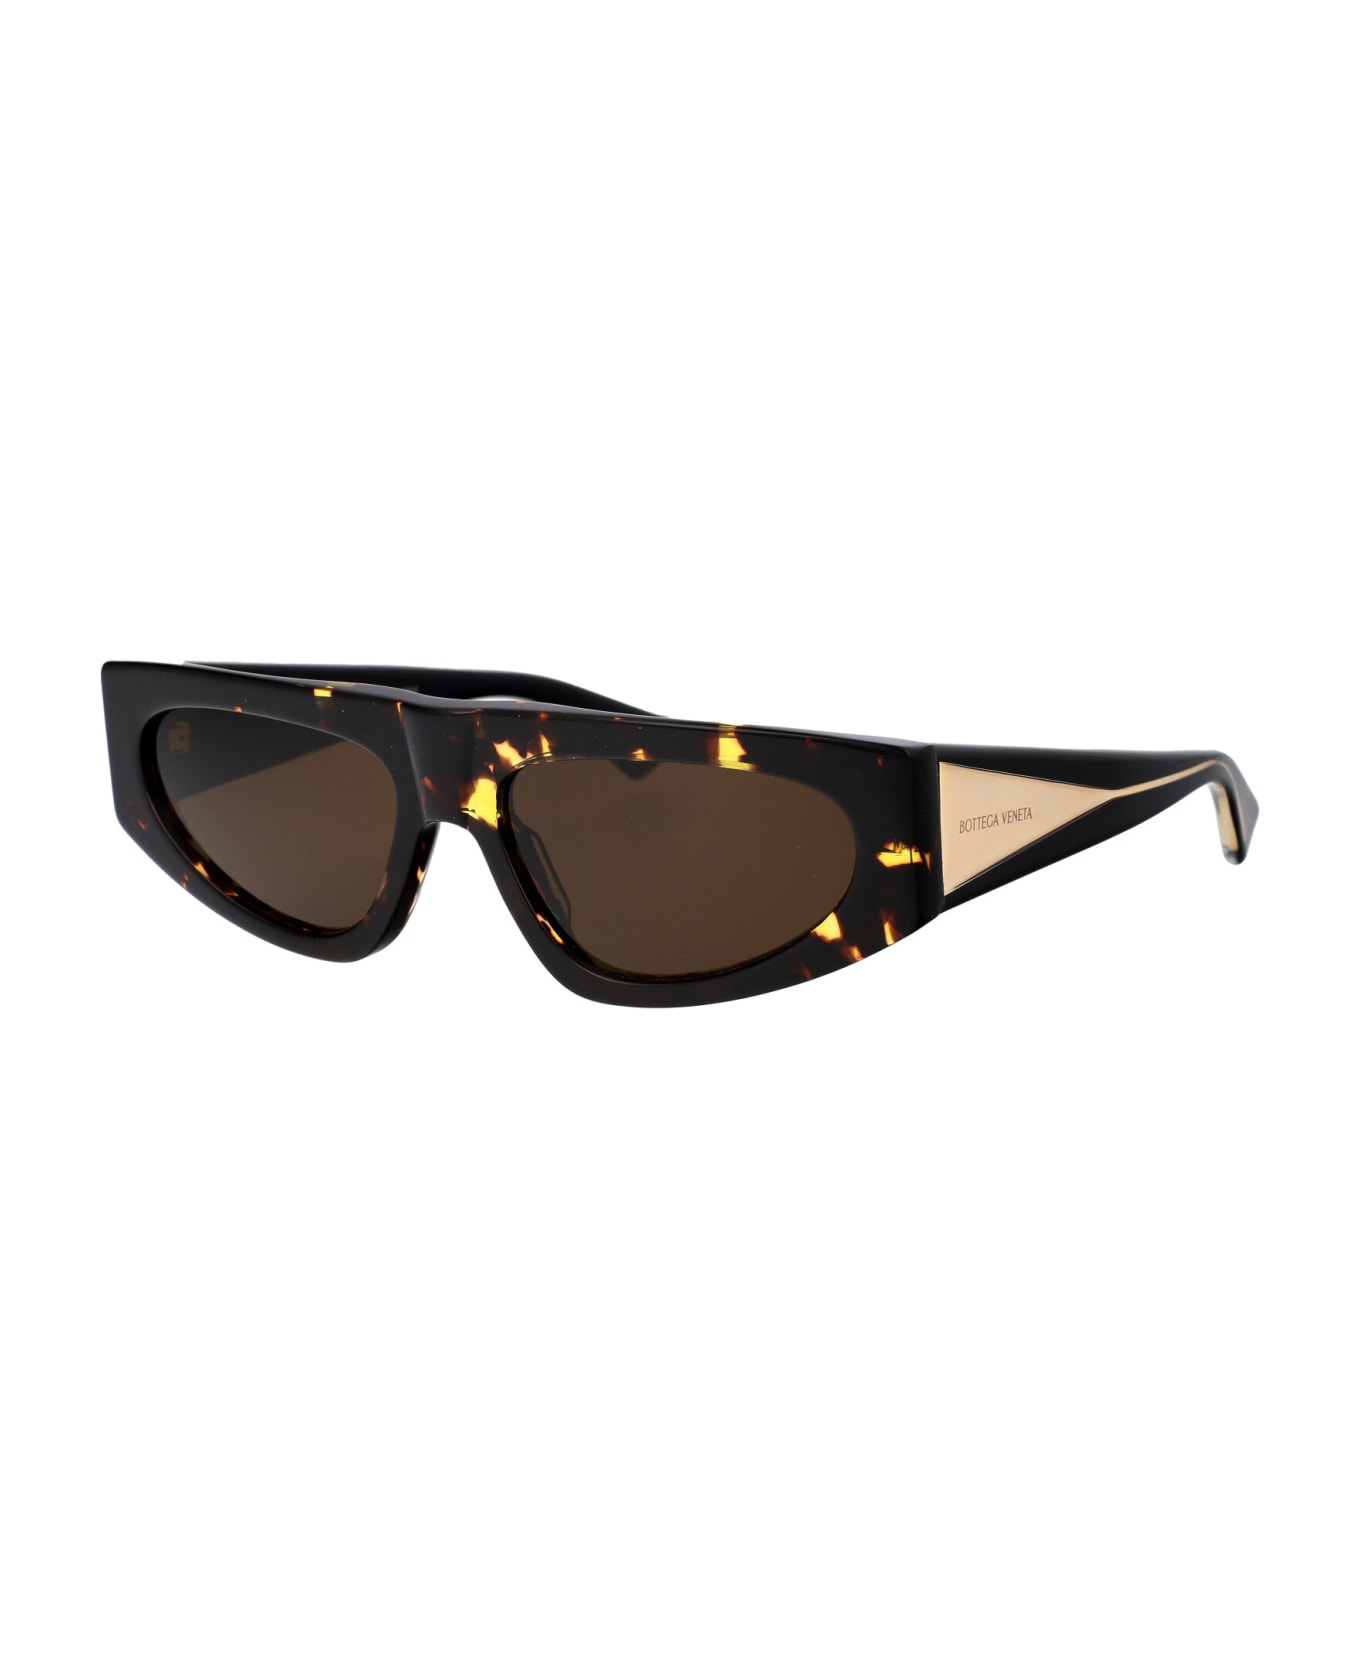 Bottega Veneta Eyewear Bv1277s Sunglasses - 002 HAVANA CRYSTAL BROWN